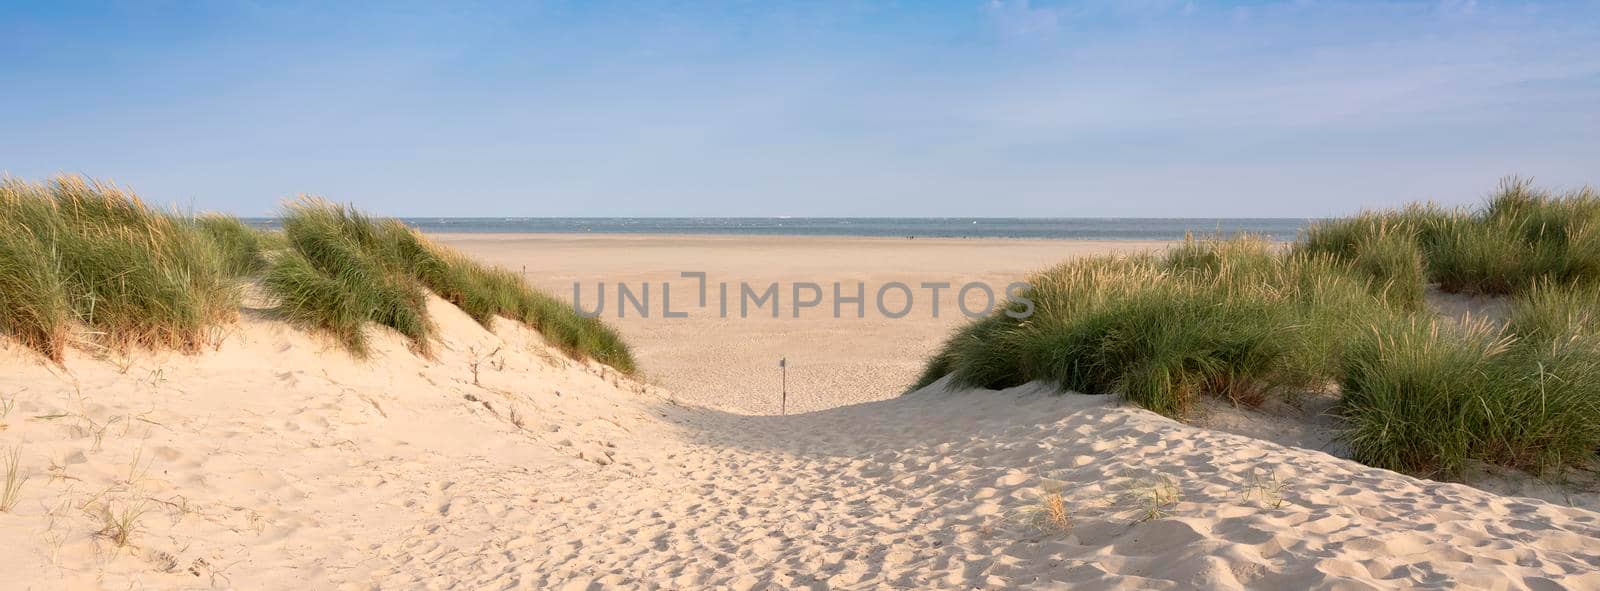 dunes and beach on dutch island of texel on sunny day with blue sky by ahavelaar